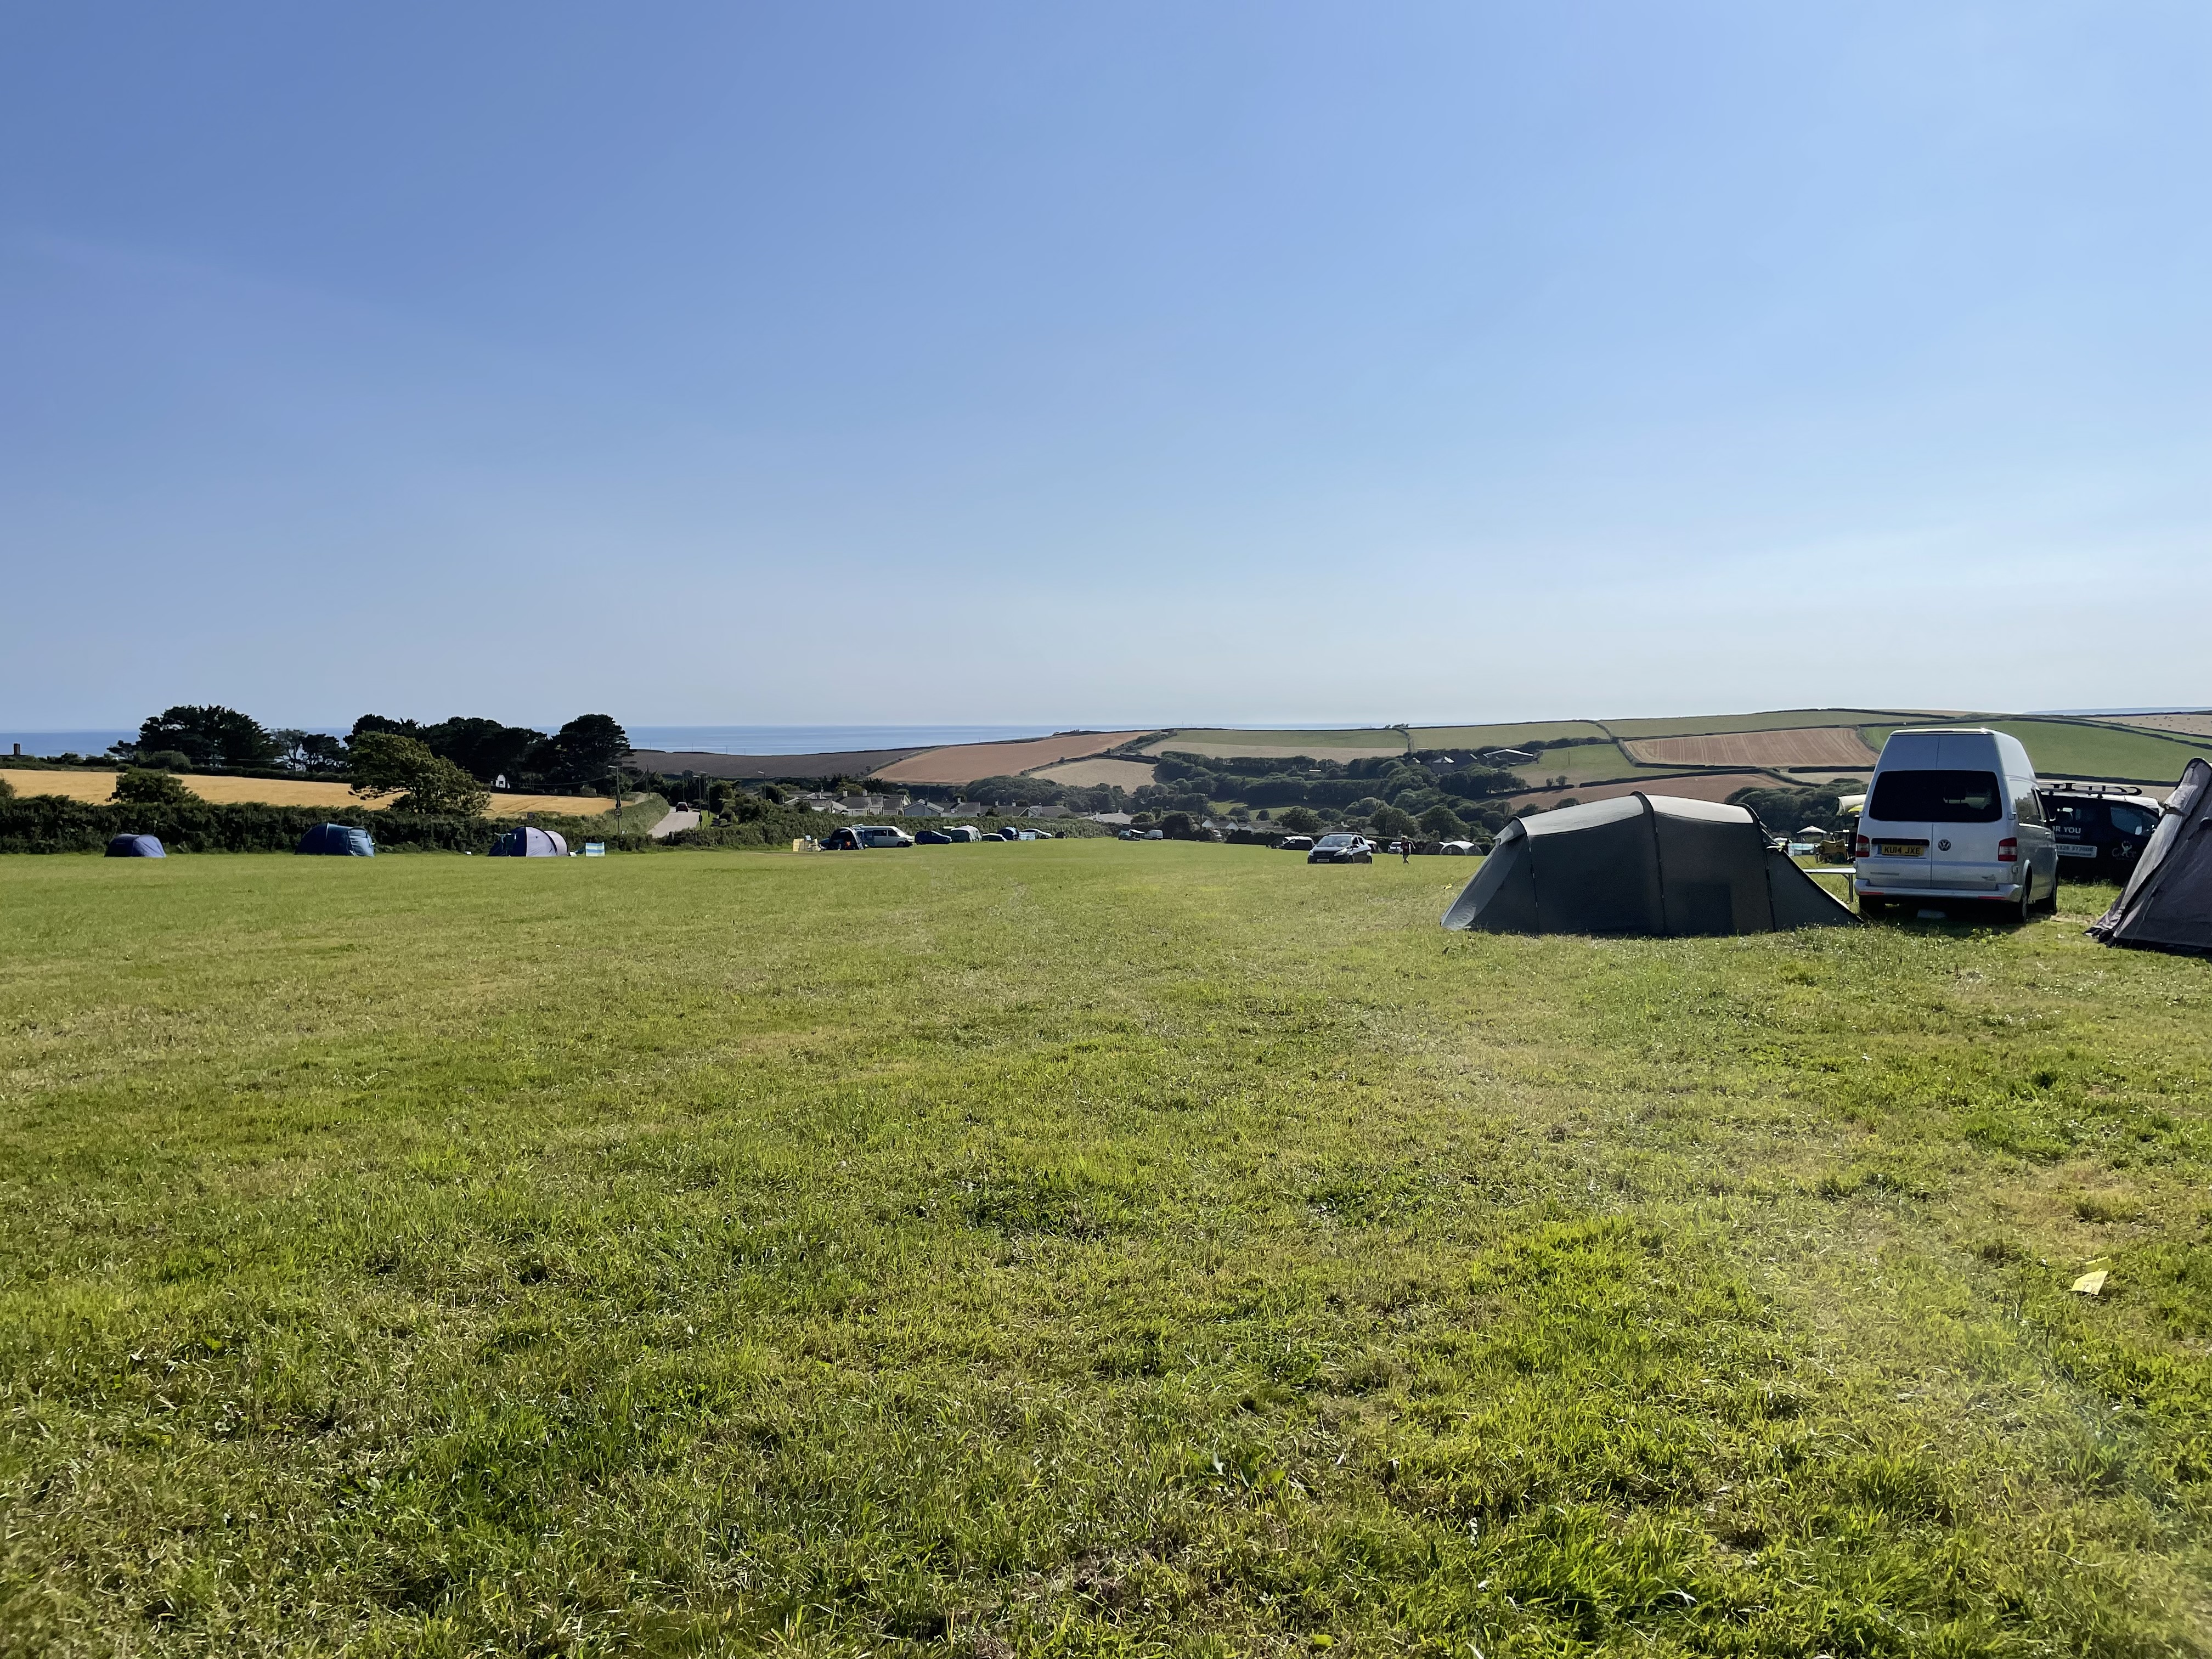 the field of Treza Camp site